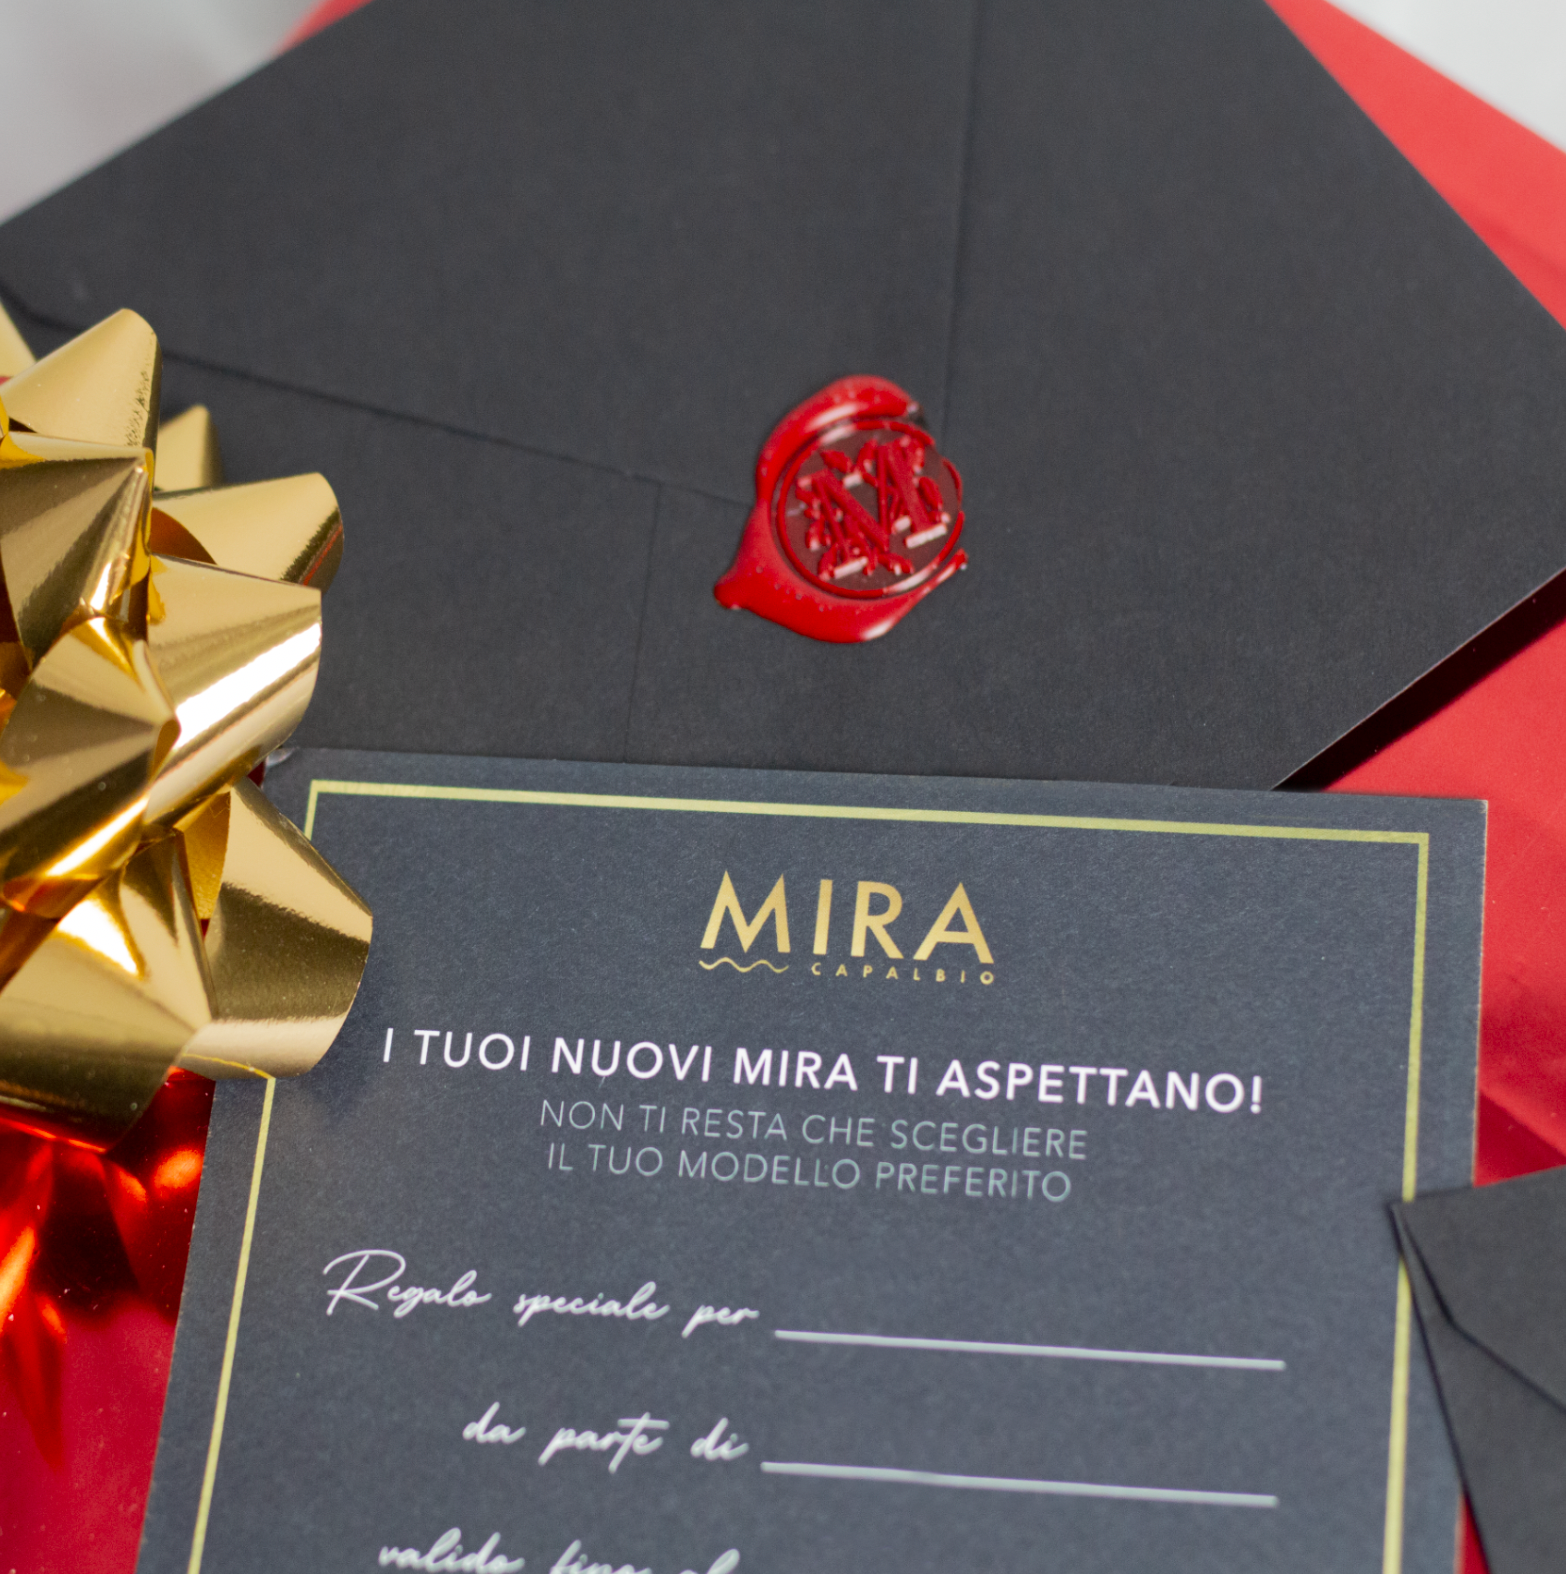 MIRA - Christmas Gift Card